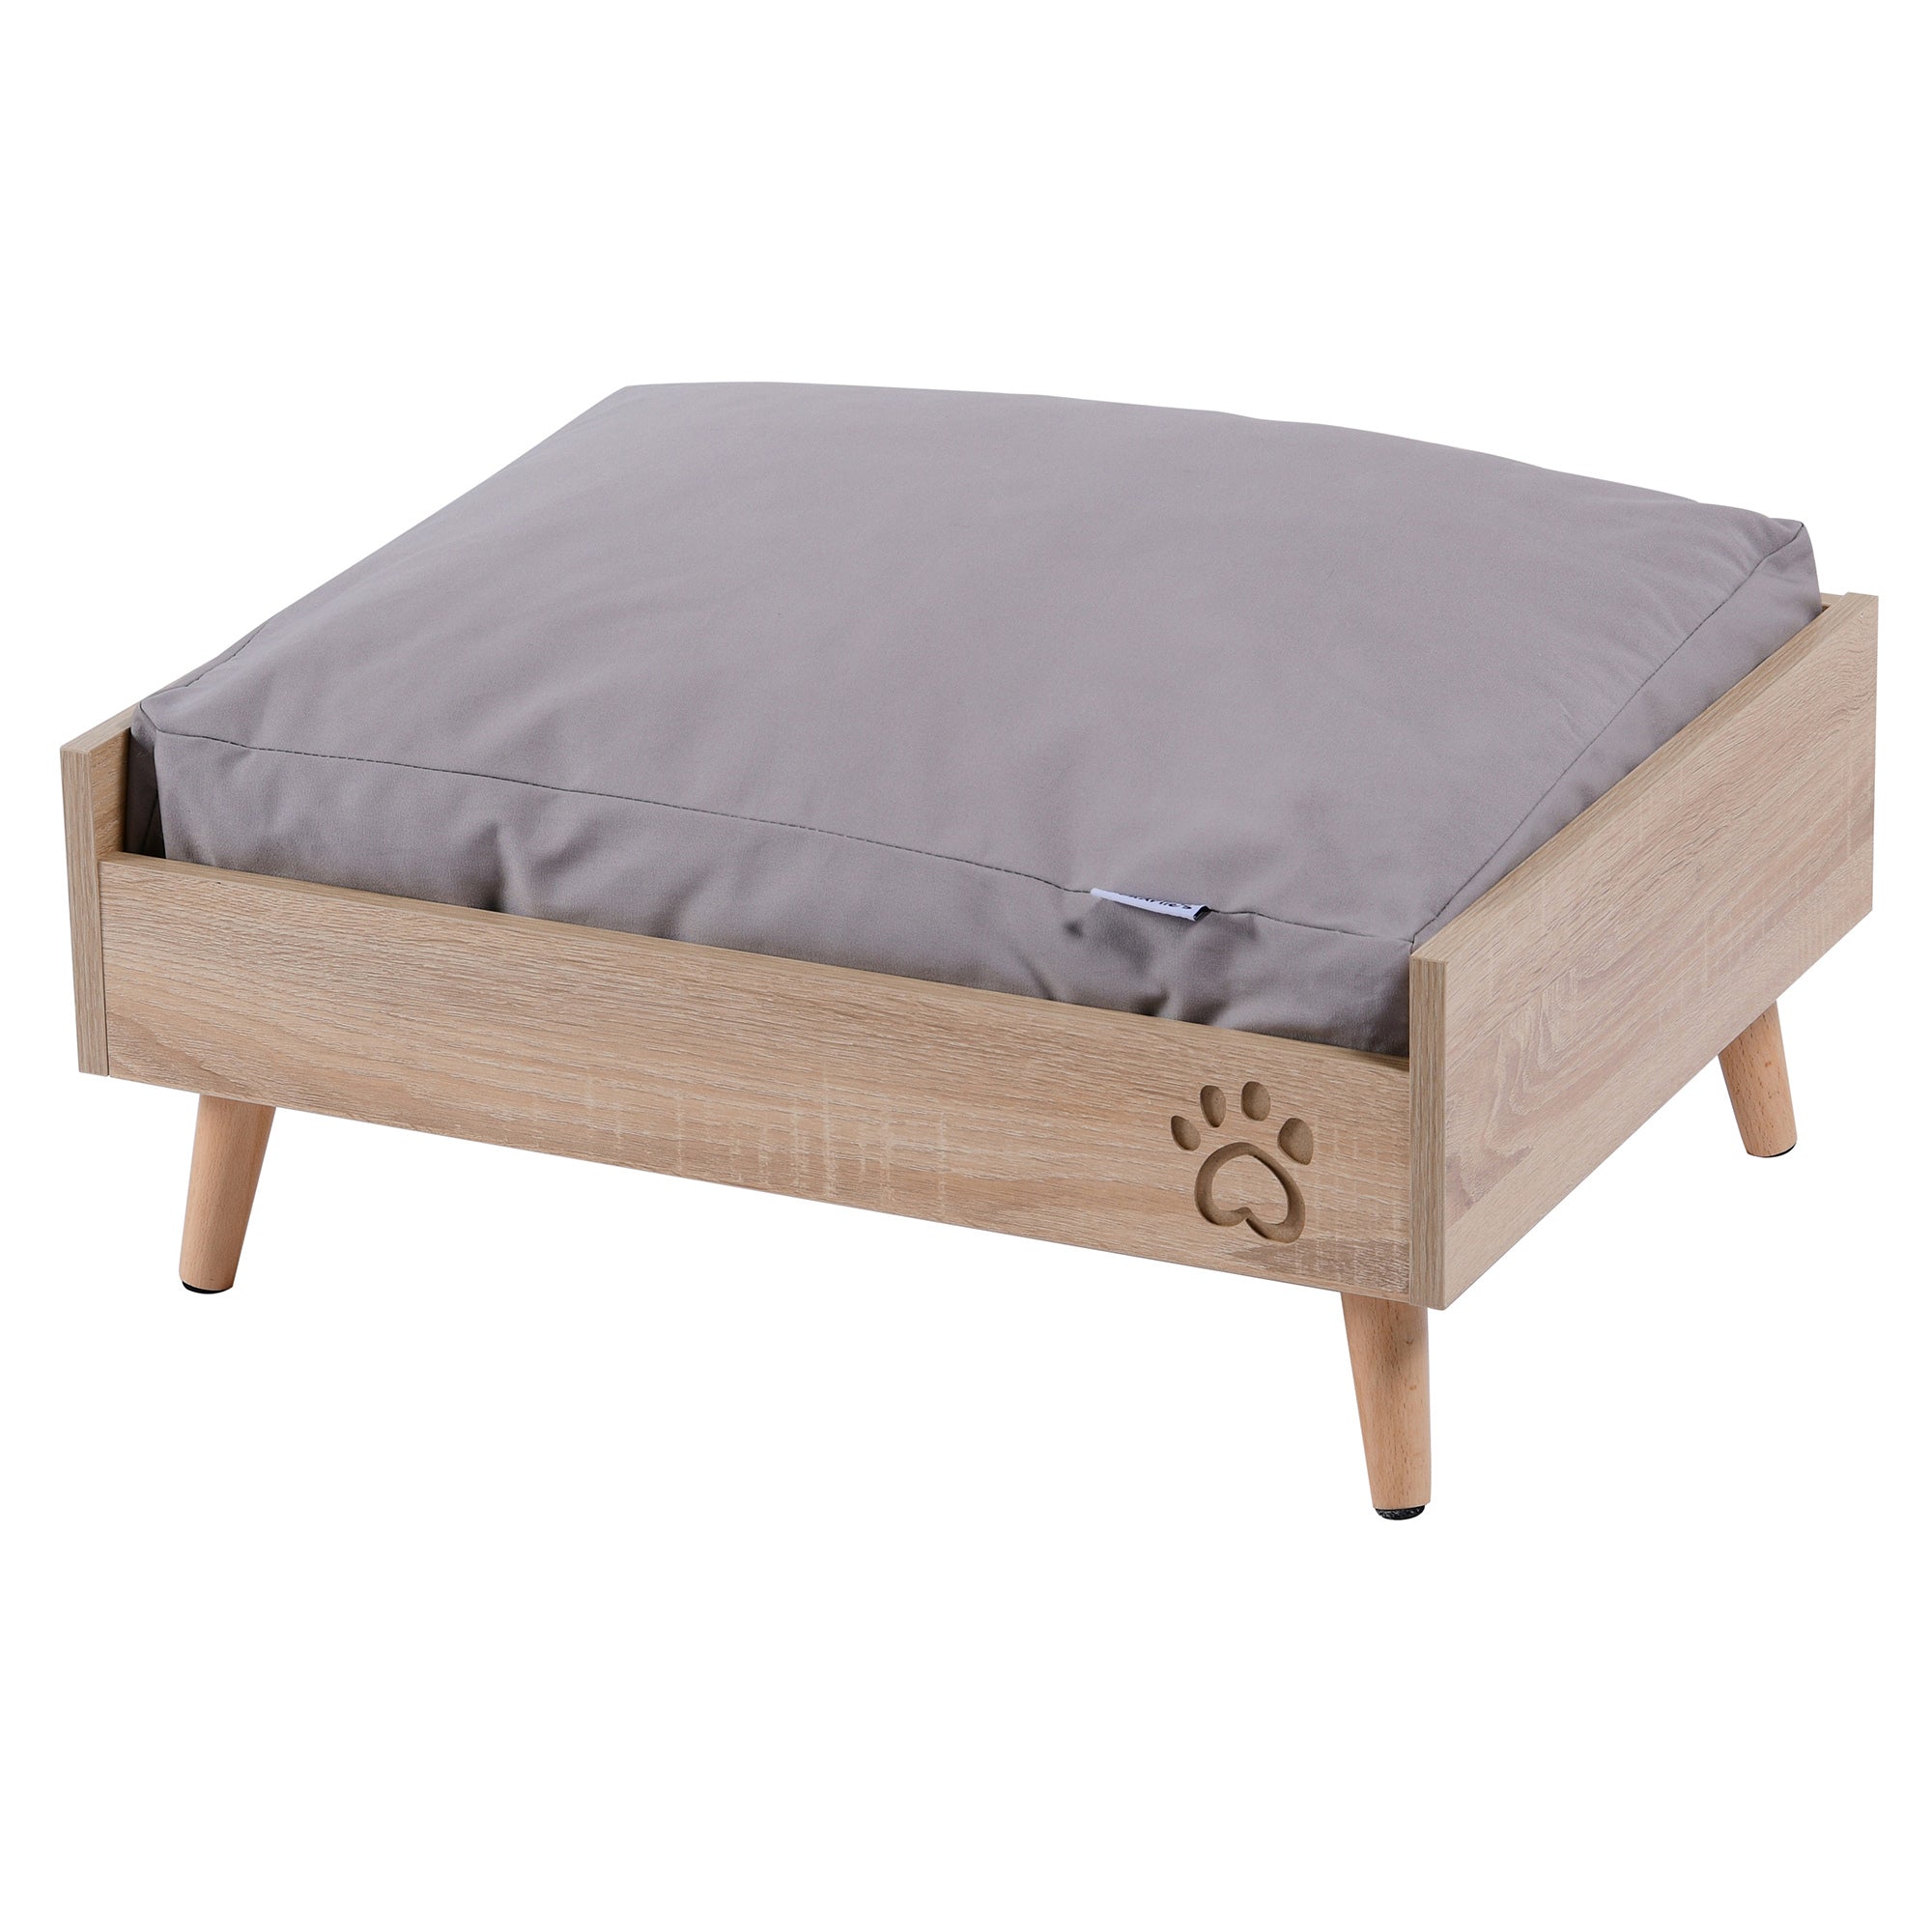 Charlie's Scandi Elevated Bed – Natural Pine Frame & Grey Mattress